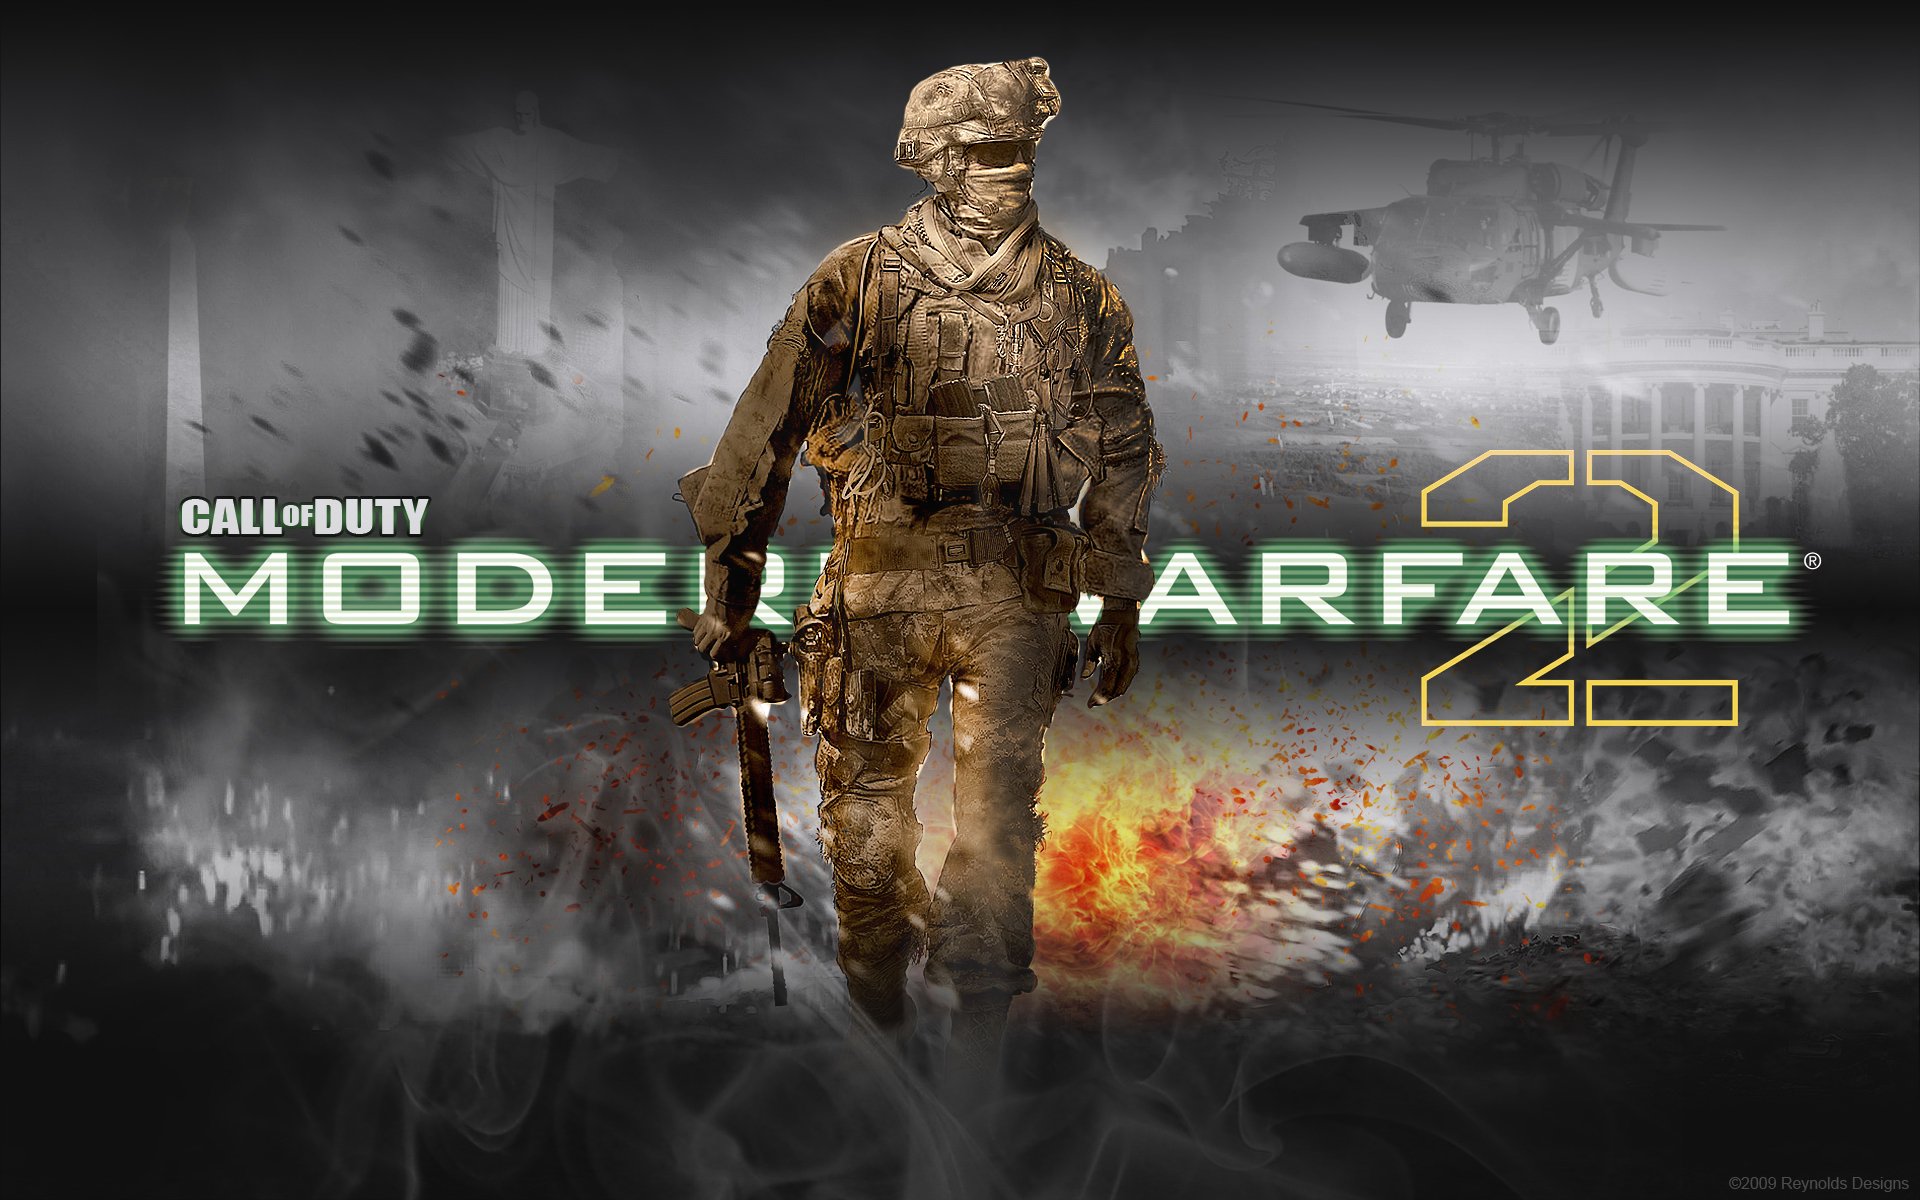 71+] Modern Warfare Wallpaper - WallpaperSafari